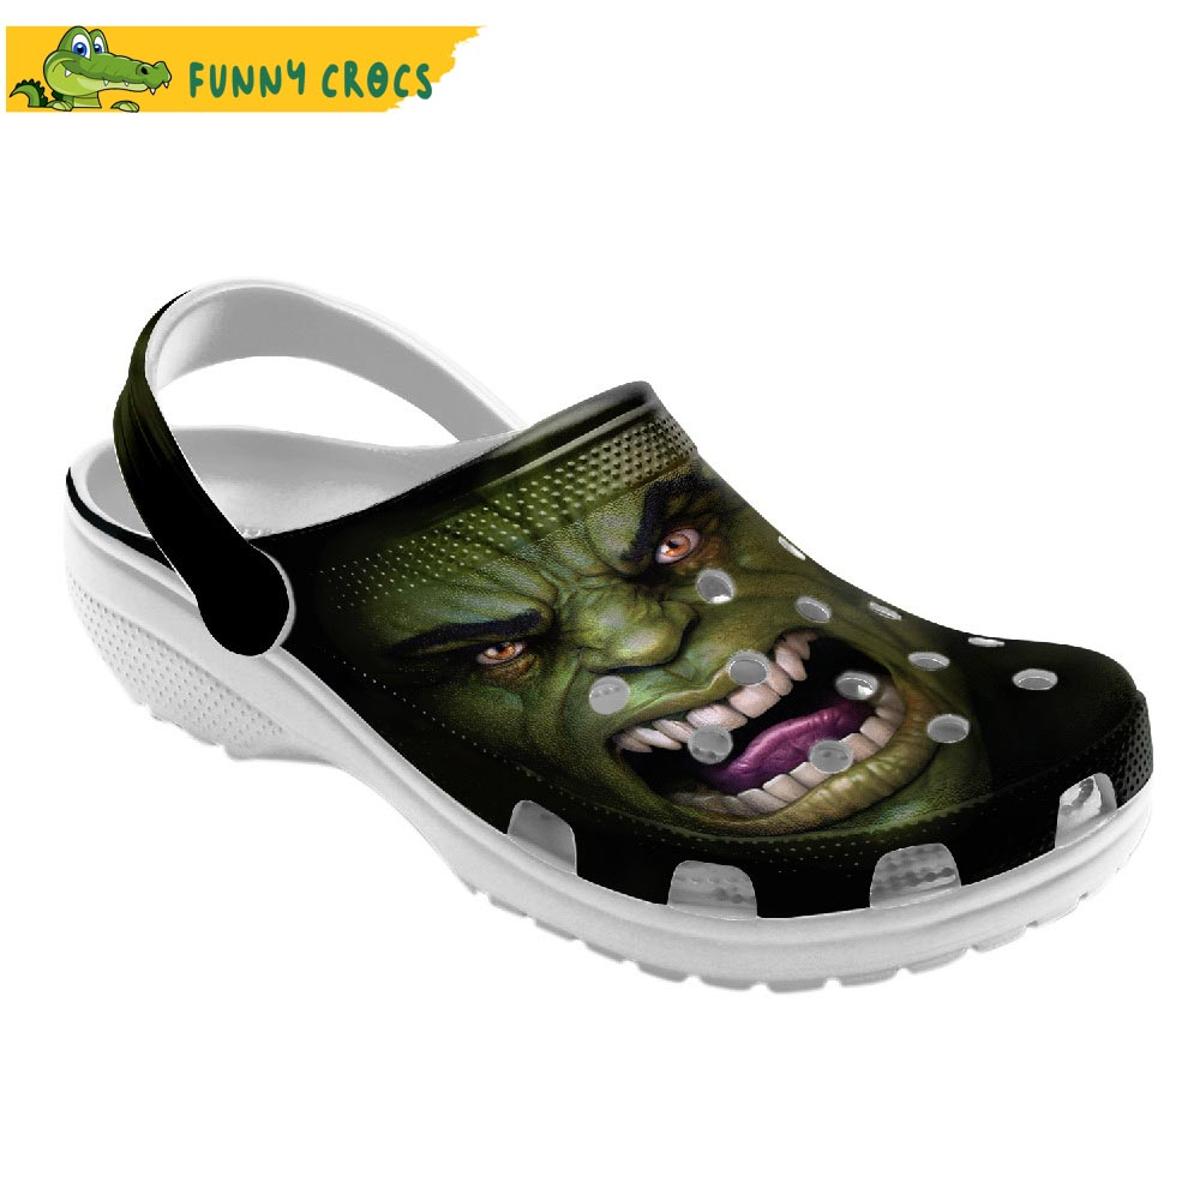 Hulk Movie Crocs Sandals